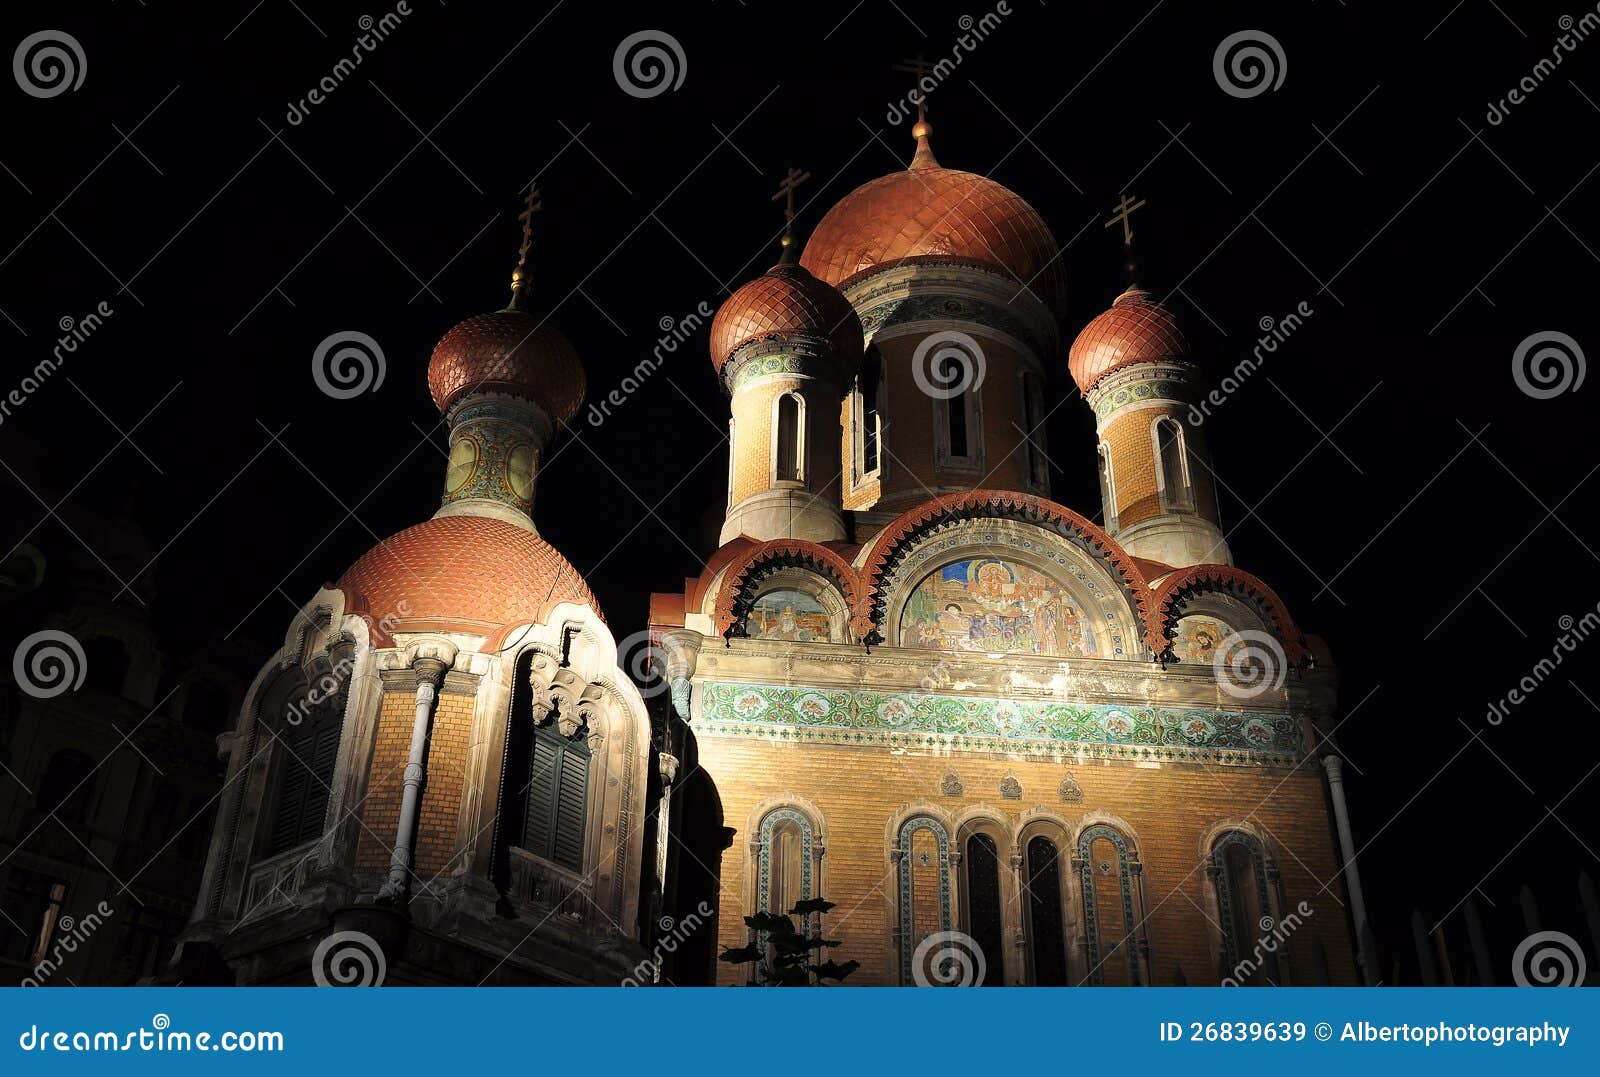 russian church at night